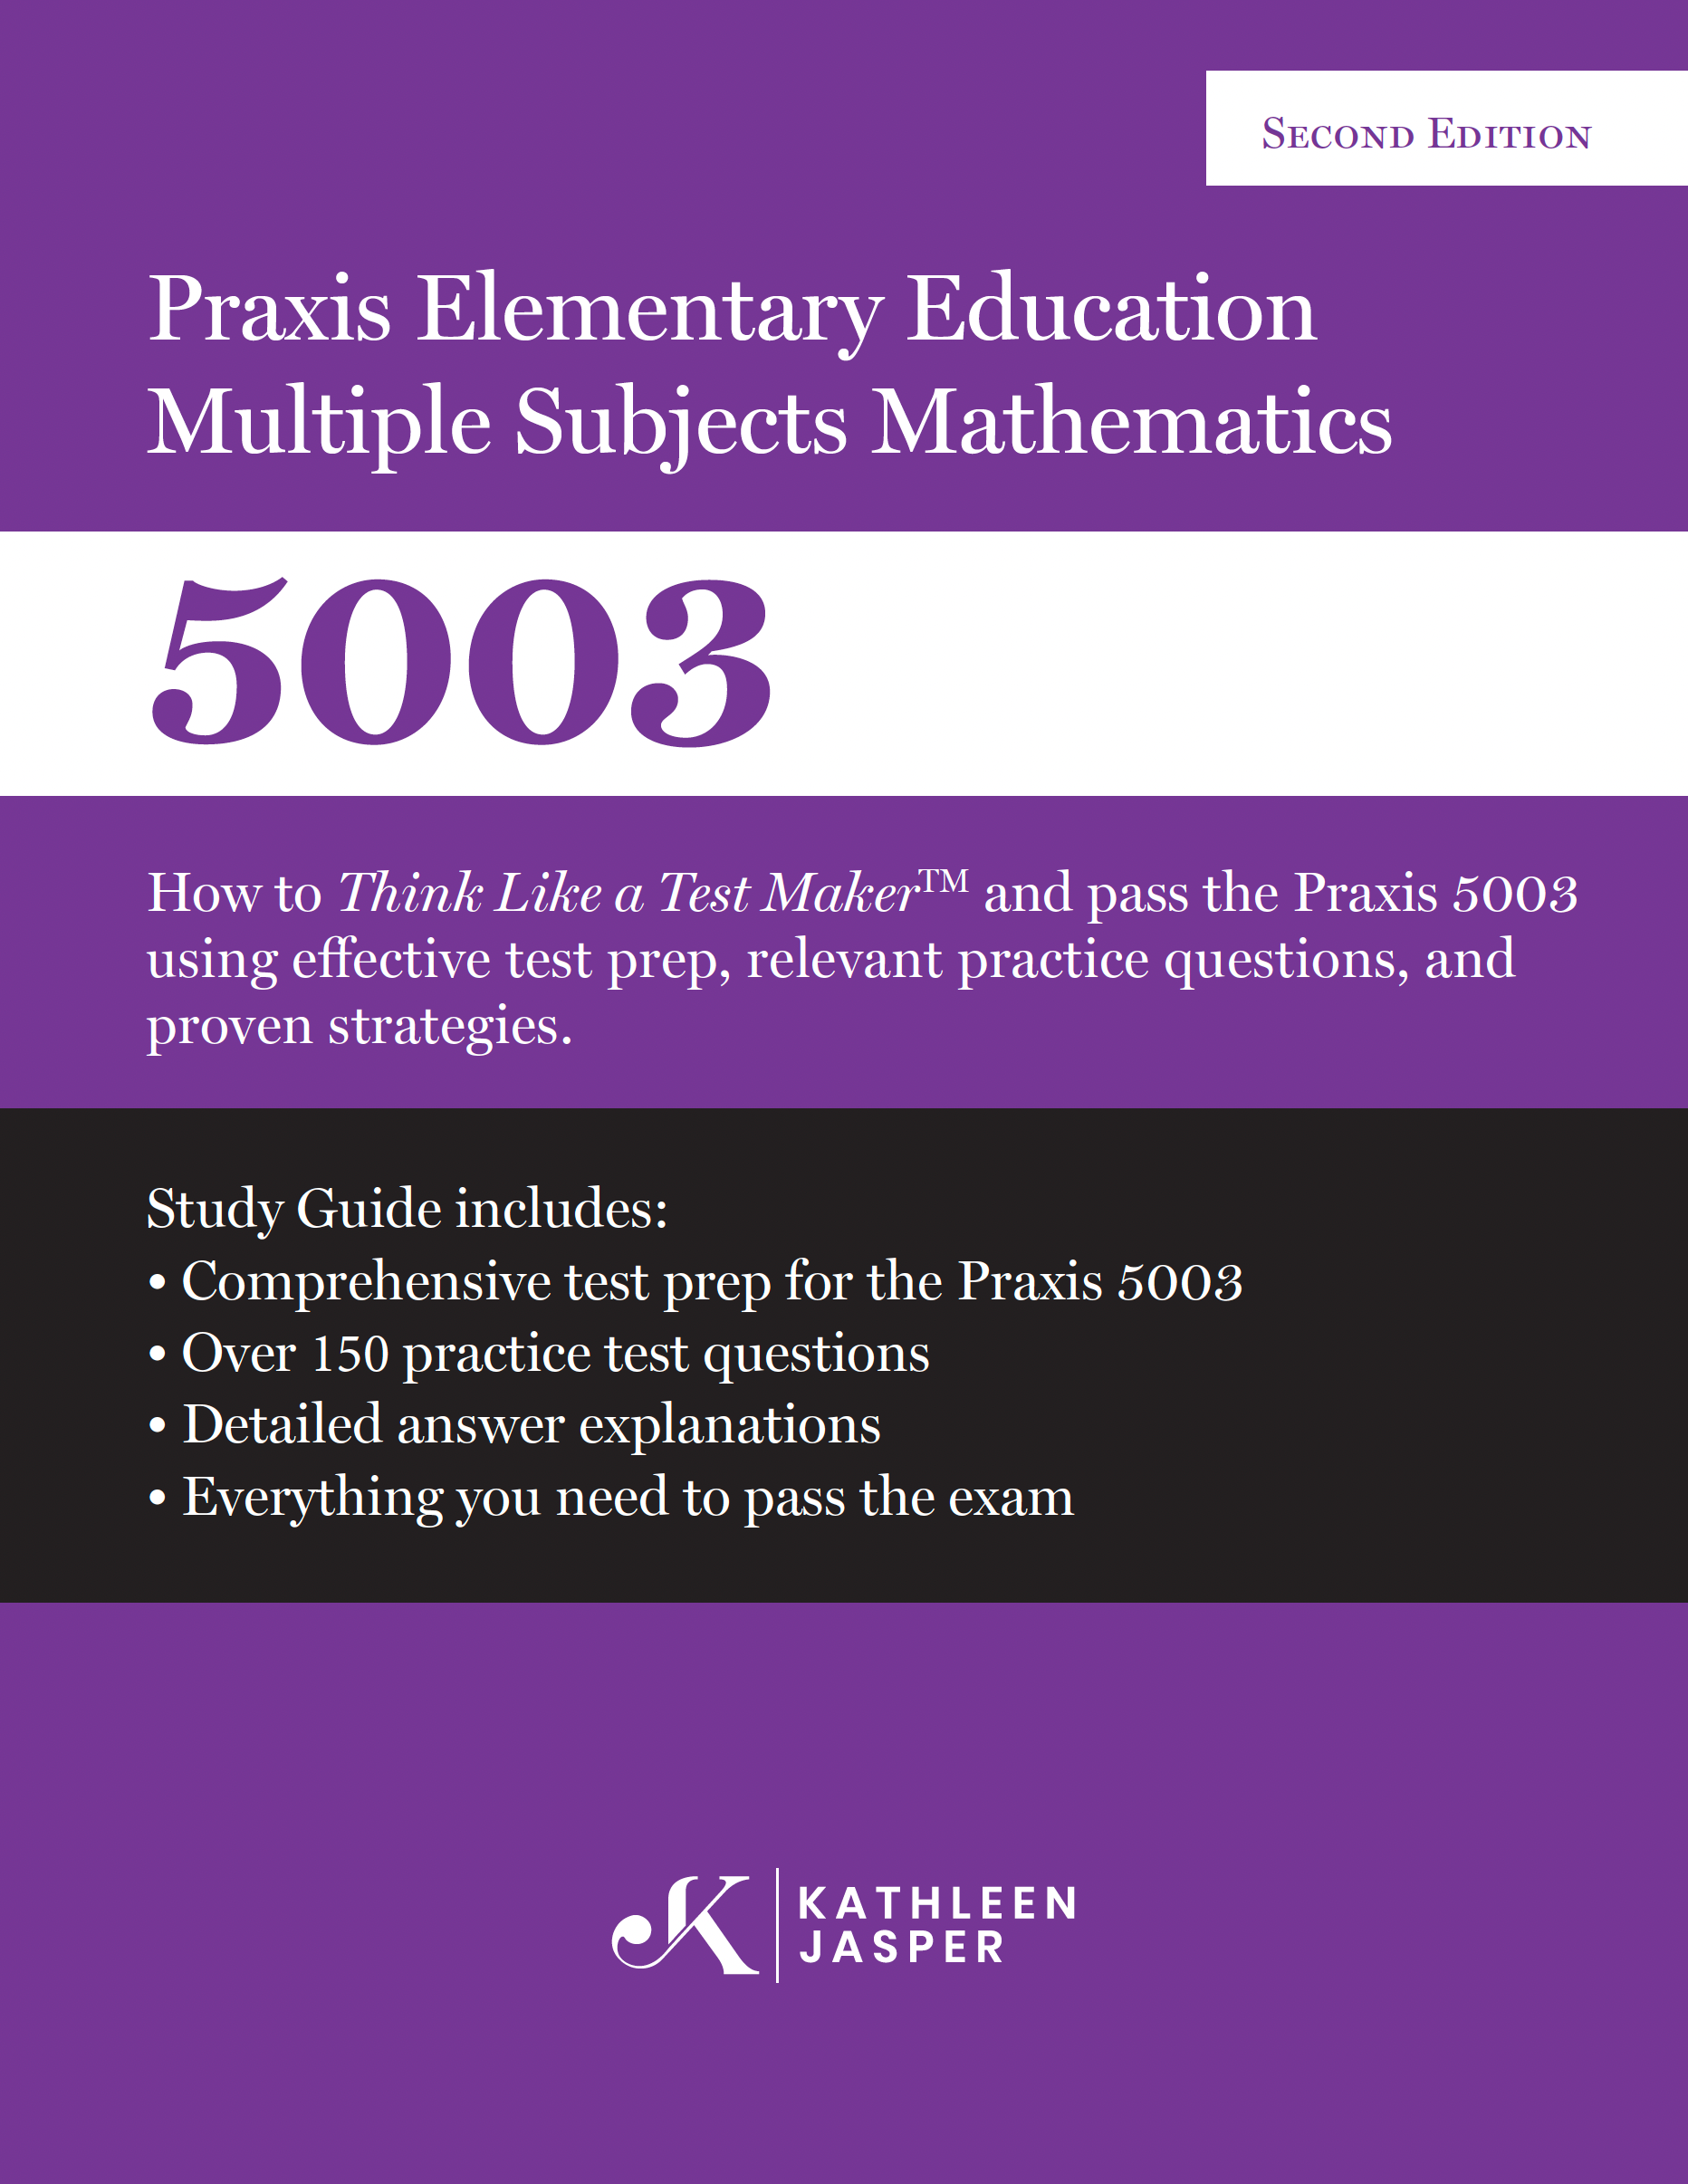 Praxis II Elementary Education: 5003 Math Digital Study Guide (Second Edition)